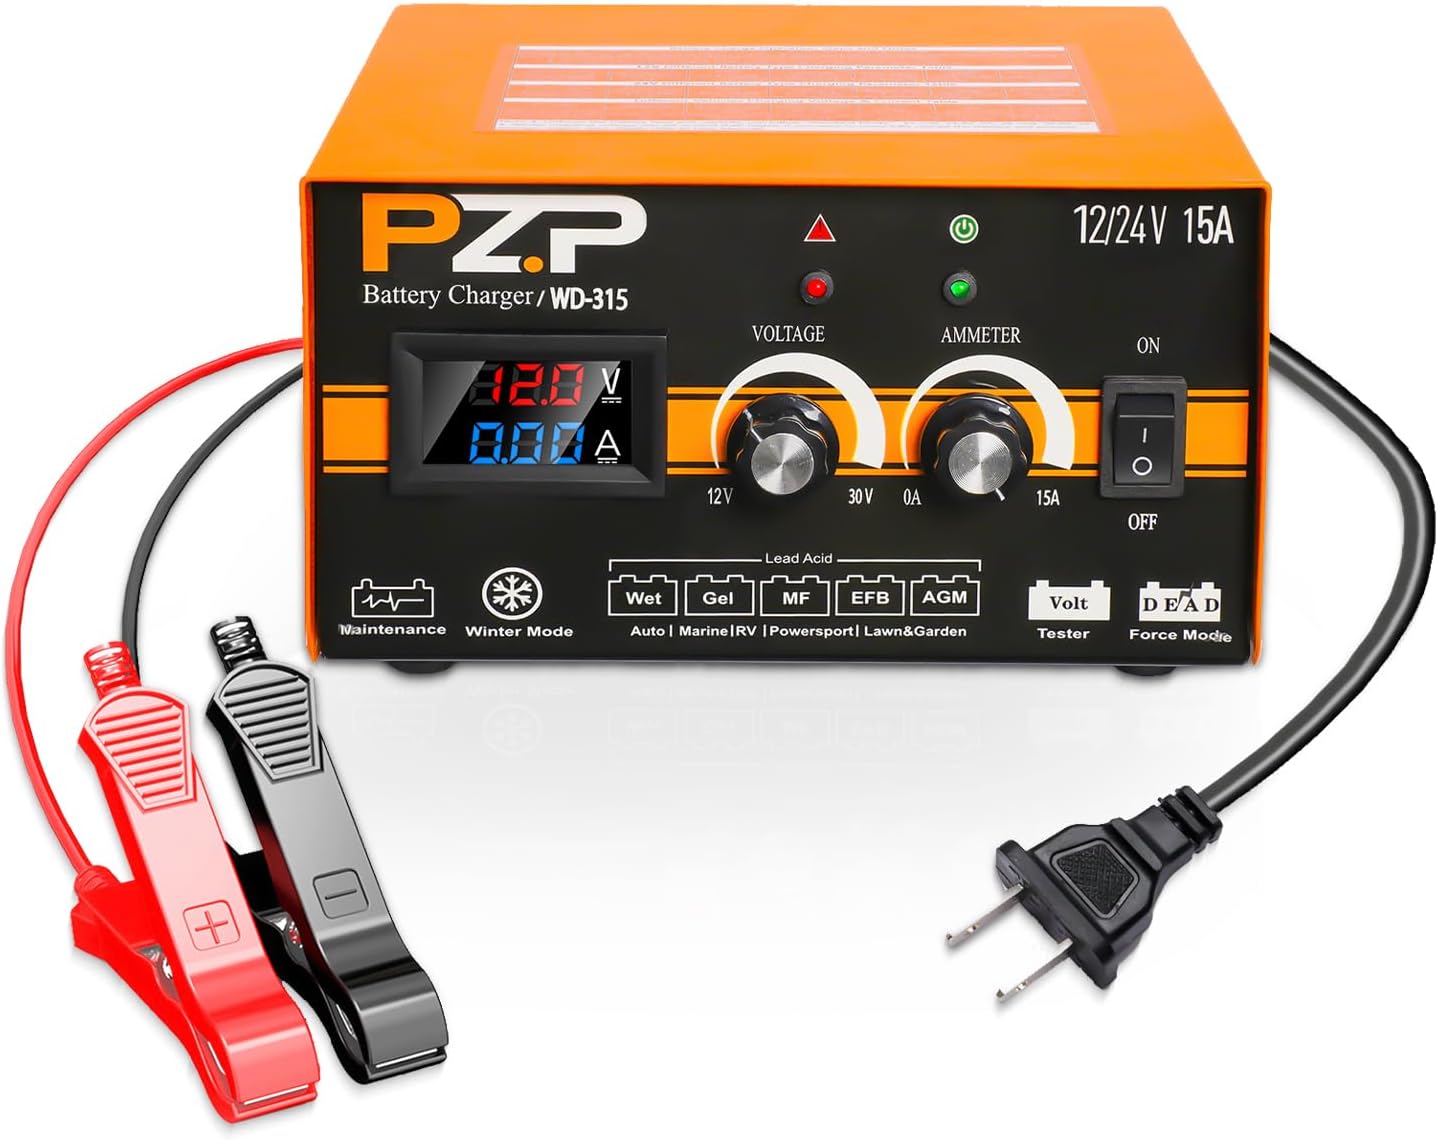 PZP 12V 24V Battery Charger Review